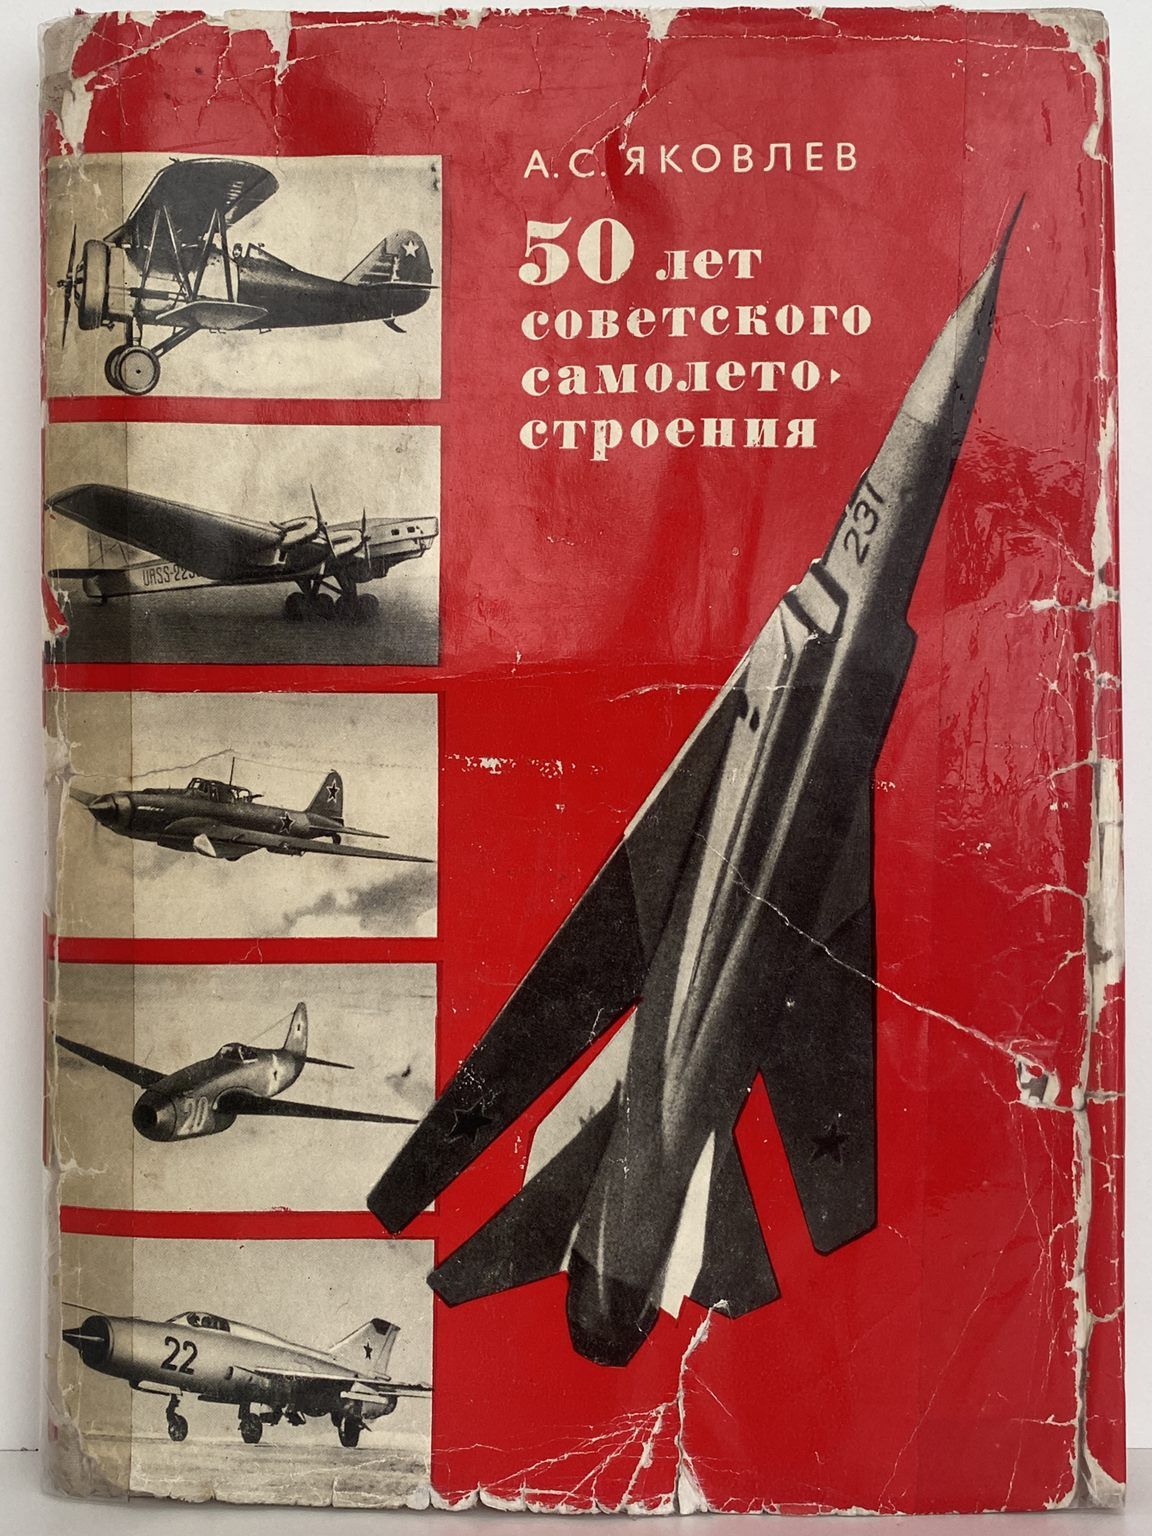 50 JET - Book on Soviet/Russian Aircraft